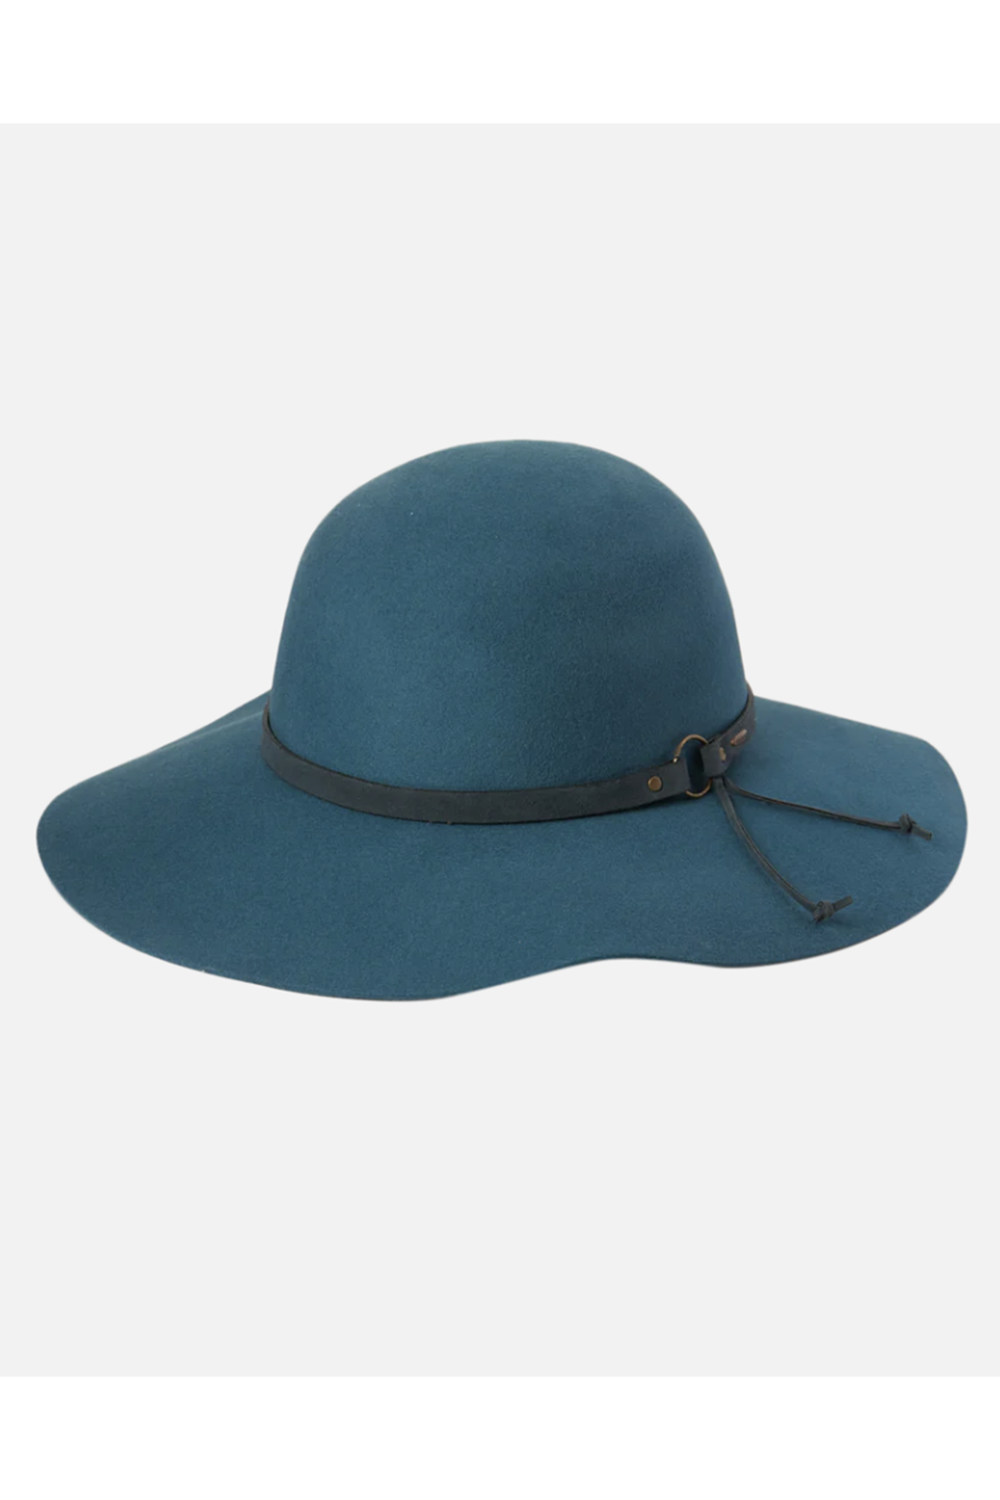 SIDEWALK SALE ITEM - Ladies Wide Brim Hat - Forever After Blue Peacock